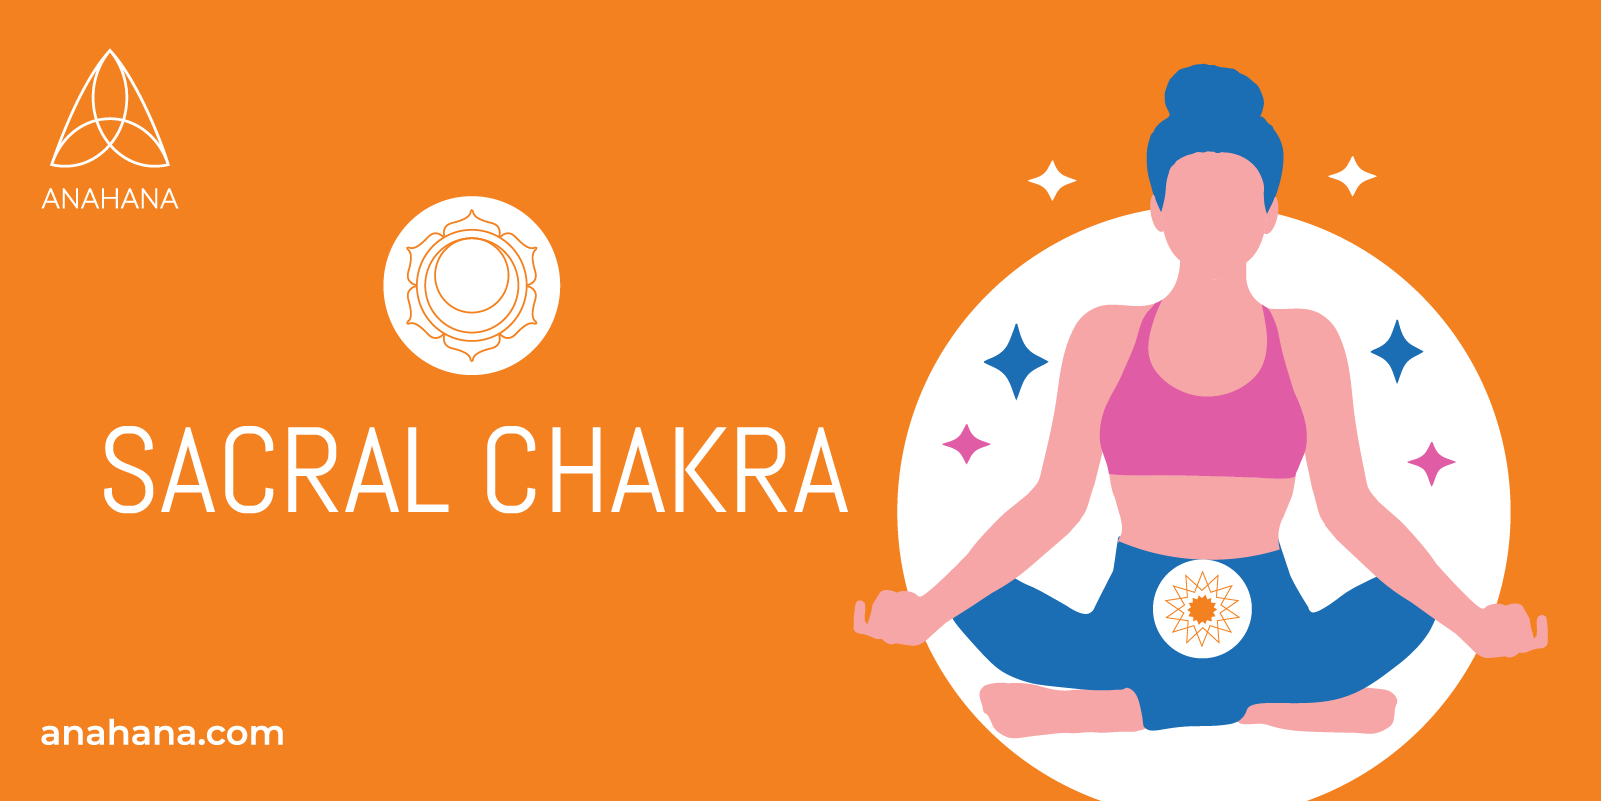 summary of the sacral chakra